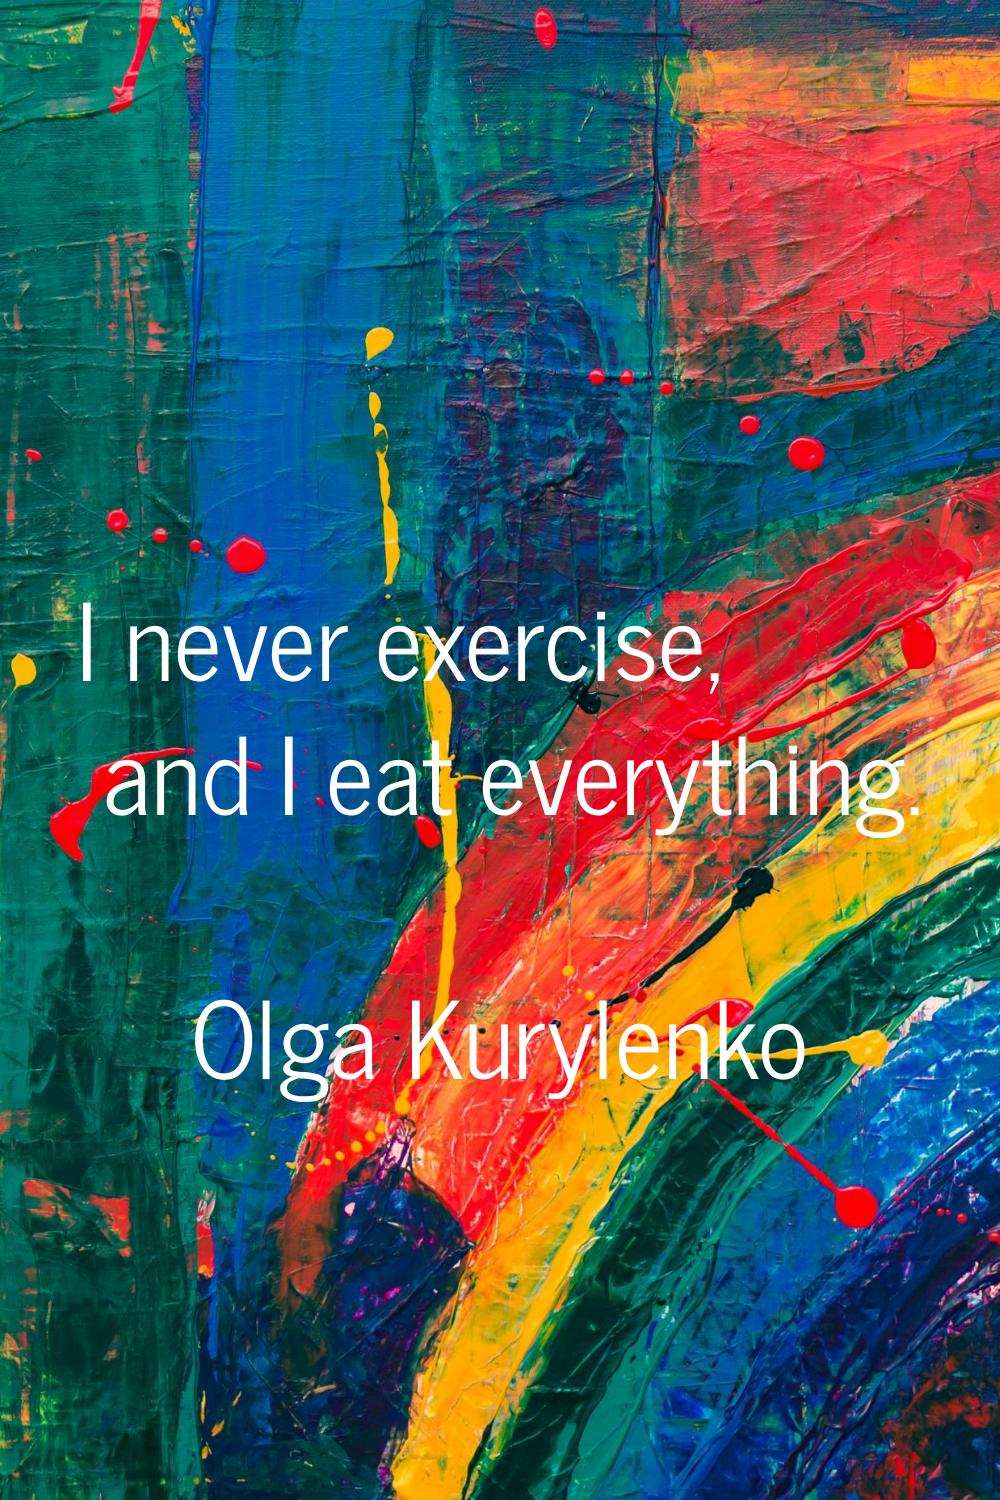 I never exercise, and I eat everything.